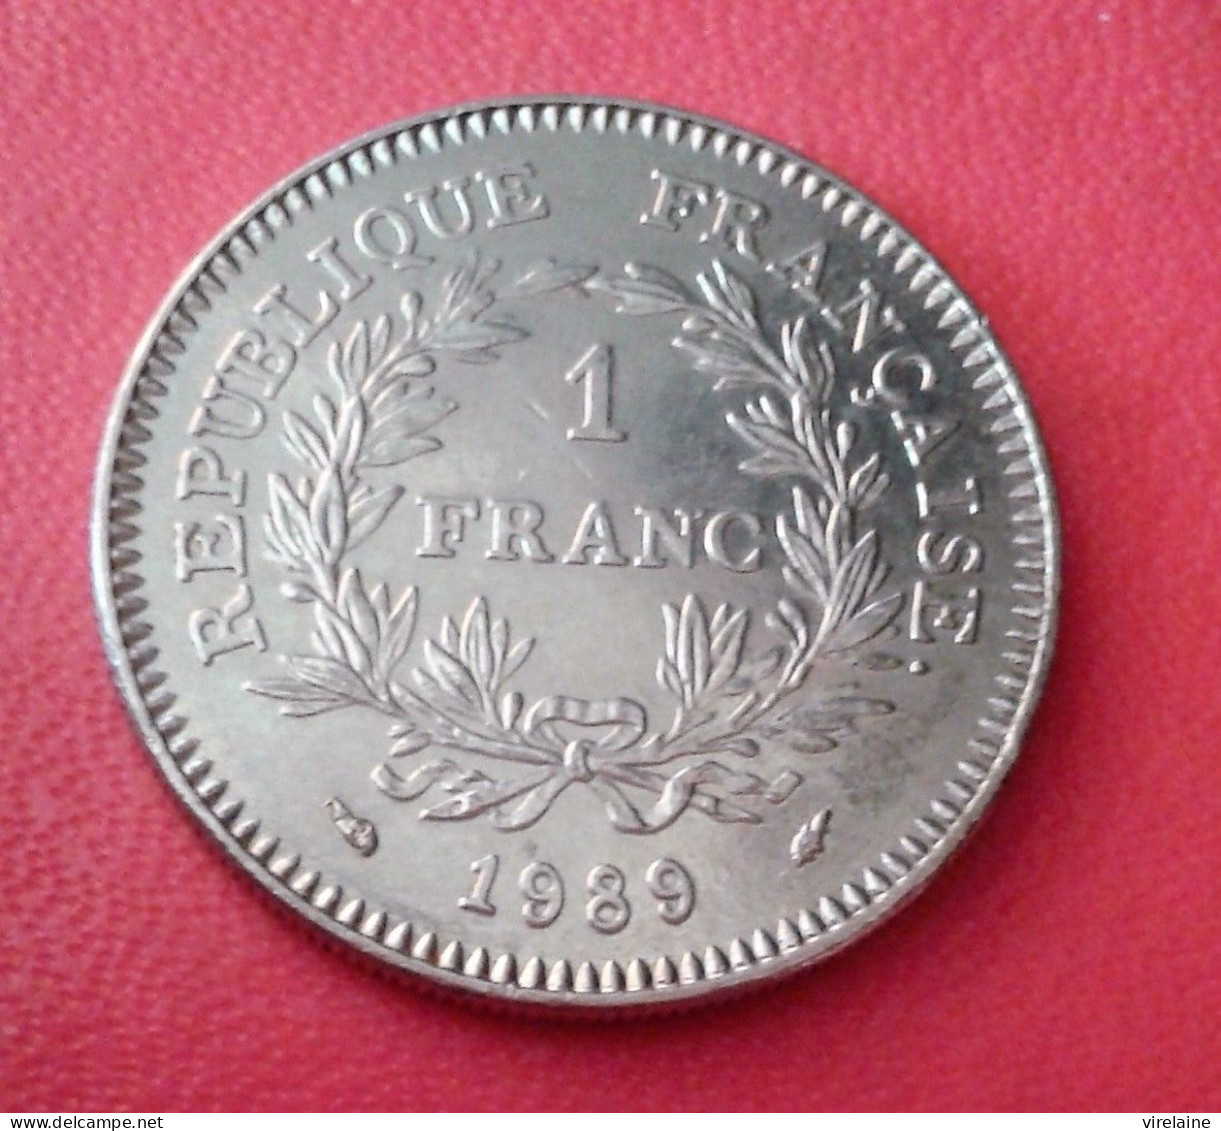 1 FRANC COMMEMORATIVE ETATS GENERAUX 1989  N° 264 - Commemorative